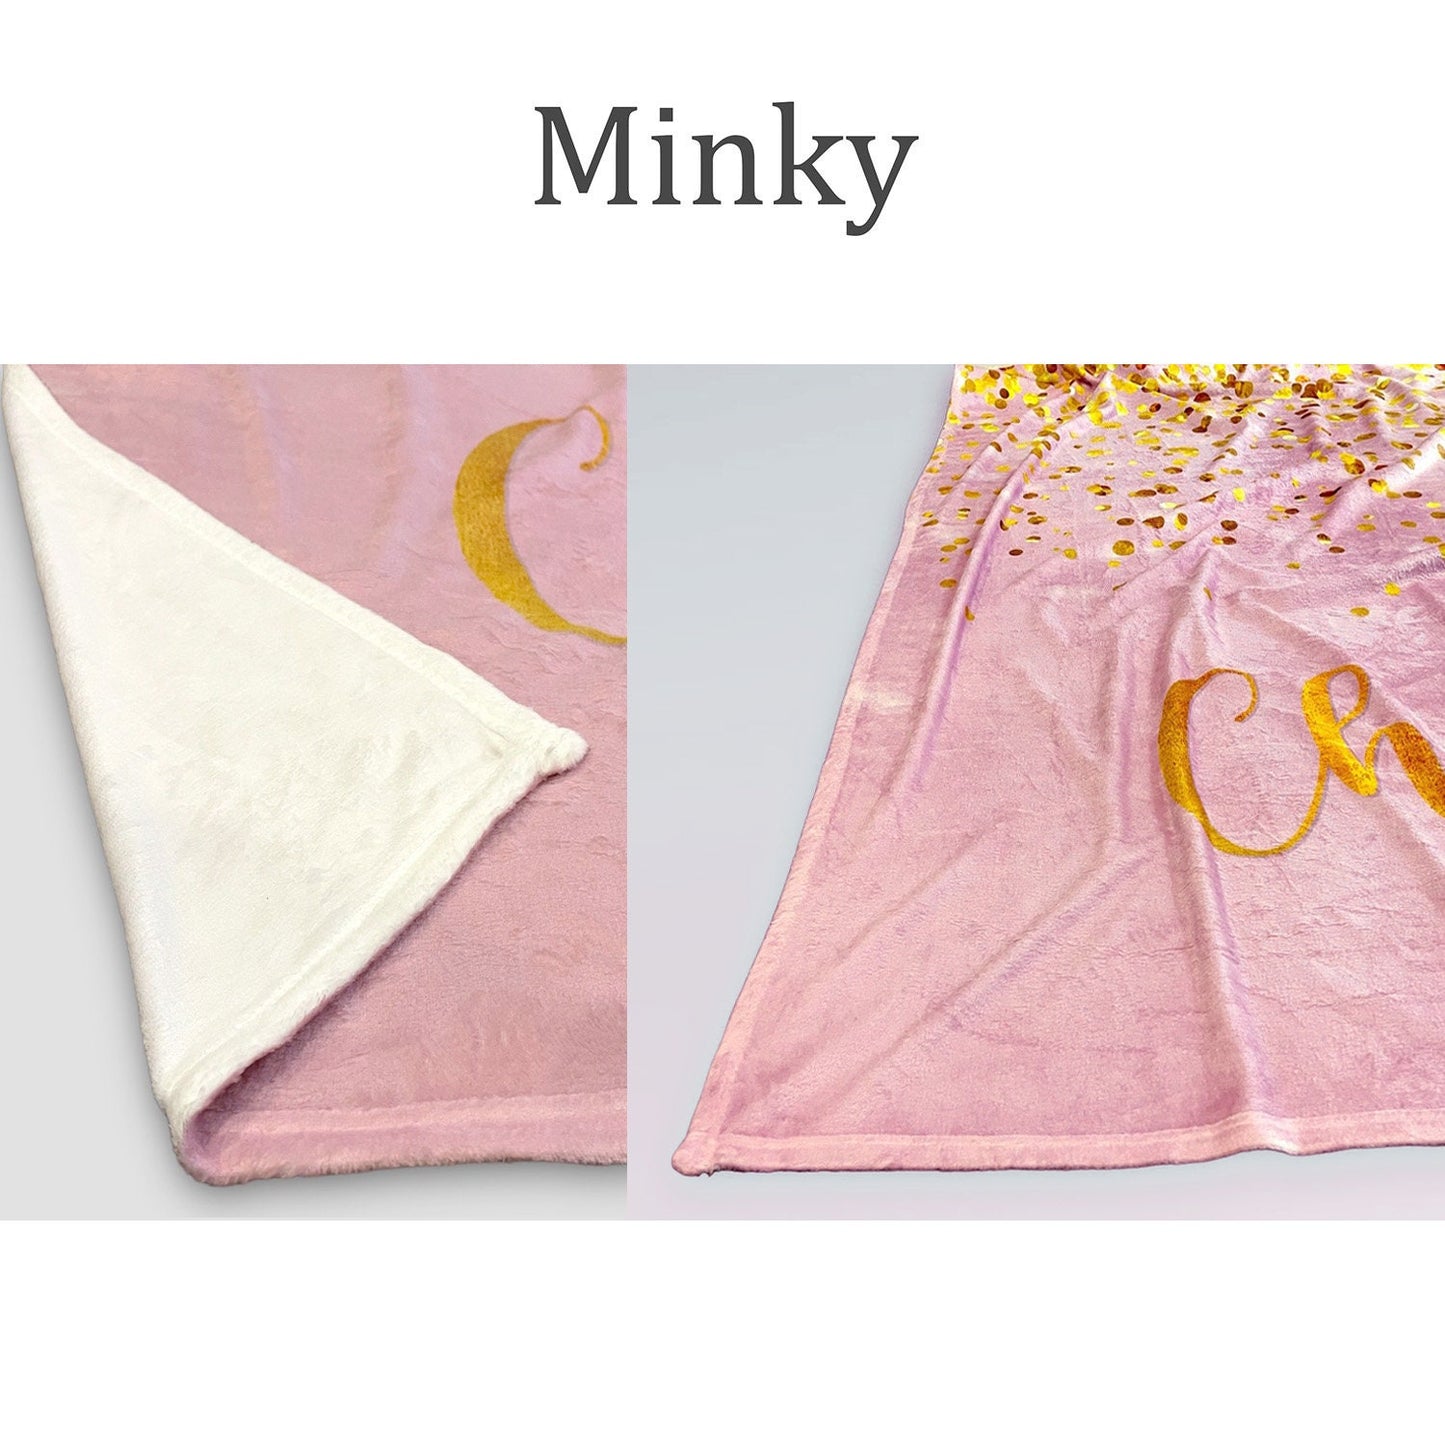 Retro Rainbow blanket, Minky or Sherpa custom blanket, Baby blanket, birthday gift idea